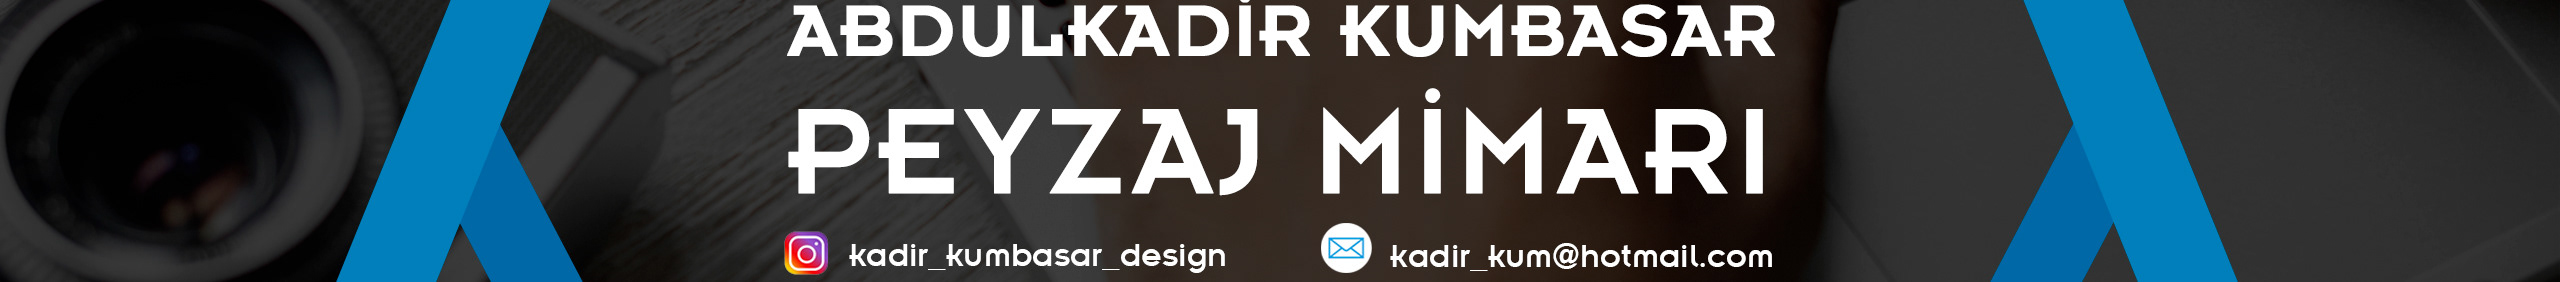 Abdulkadir KUMBASAR's profile banner